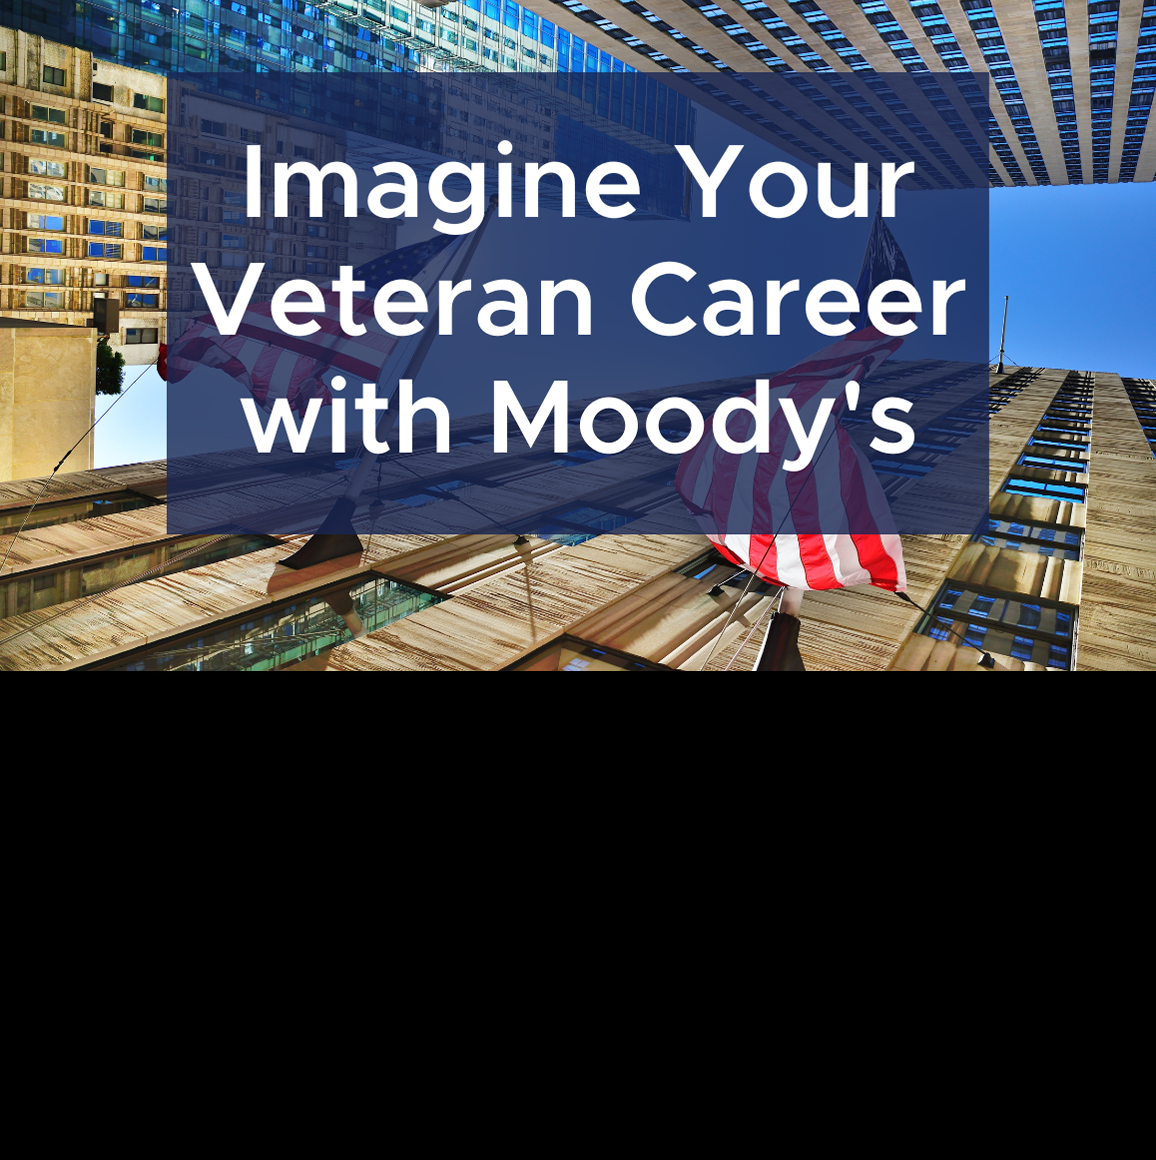 Imagine Your Veteran Career with Moody's